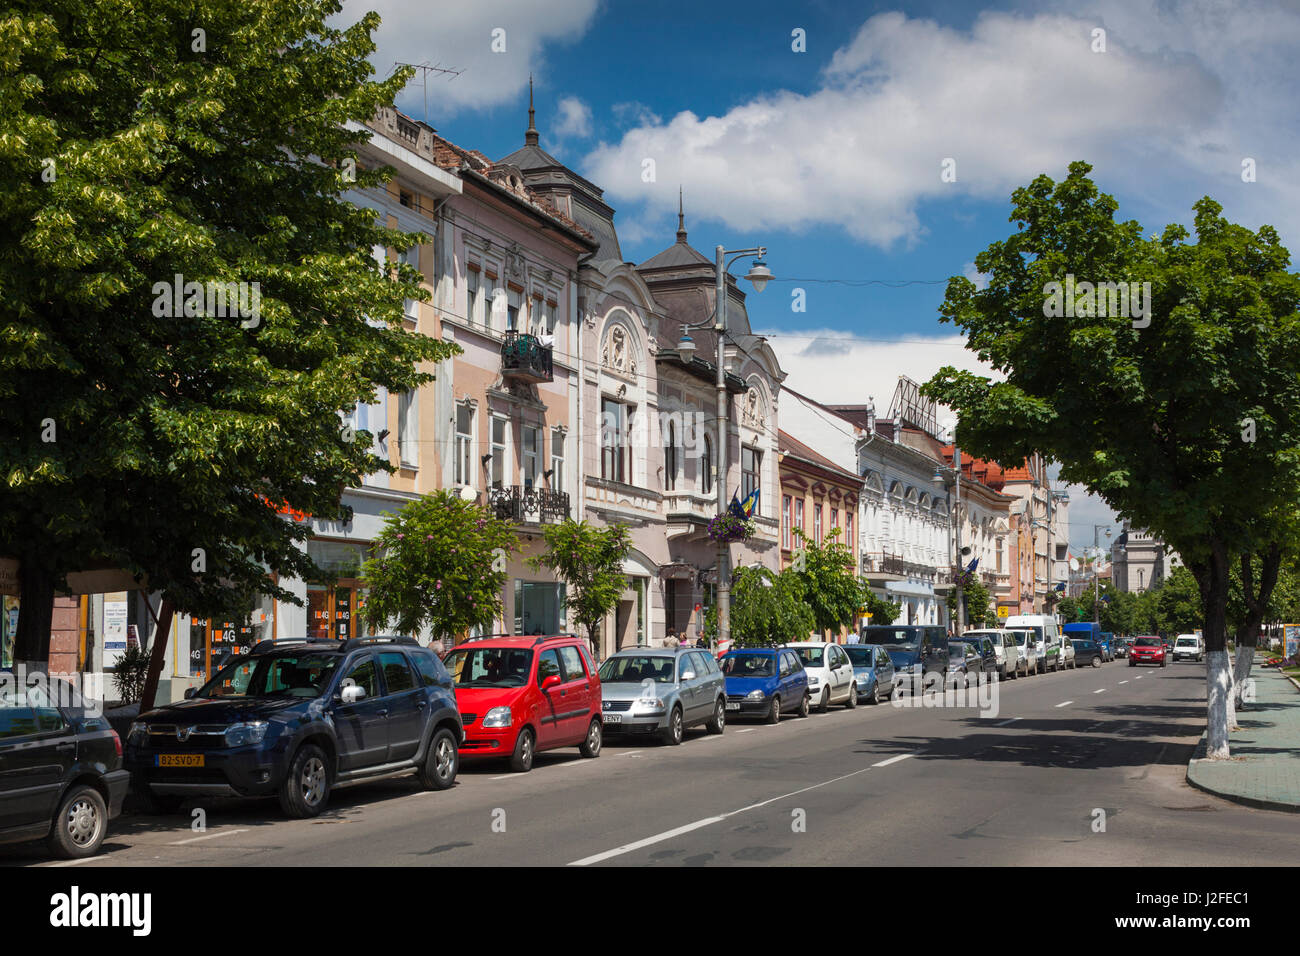 Romania, Transylvania, Targu Mures, buildings along Piata Trandafirilor Square Stock Photo